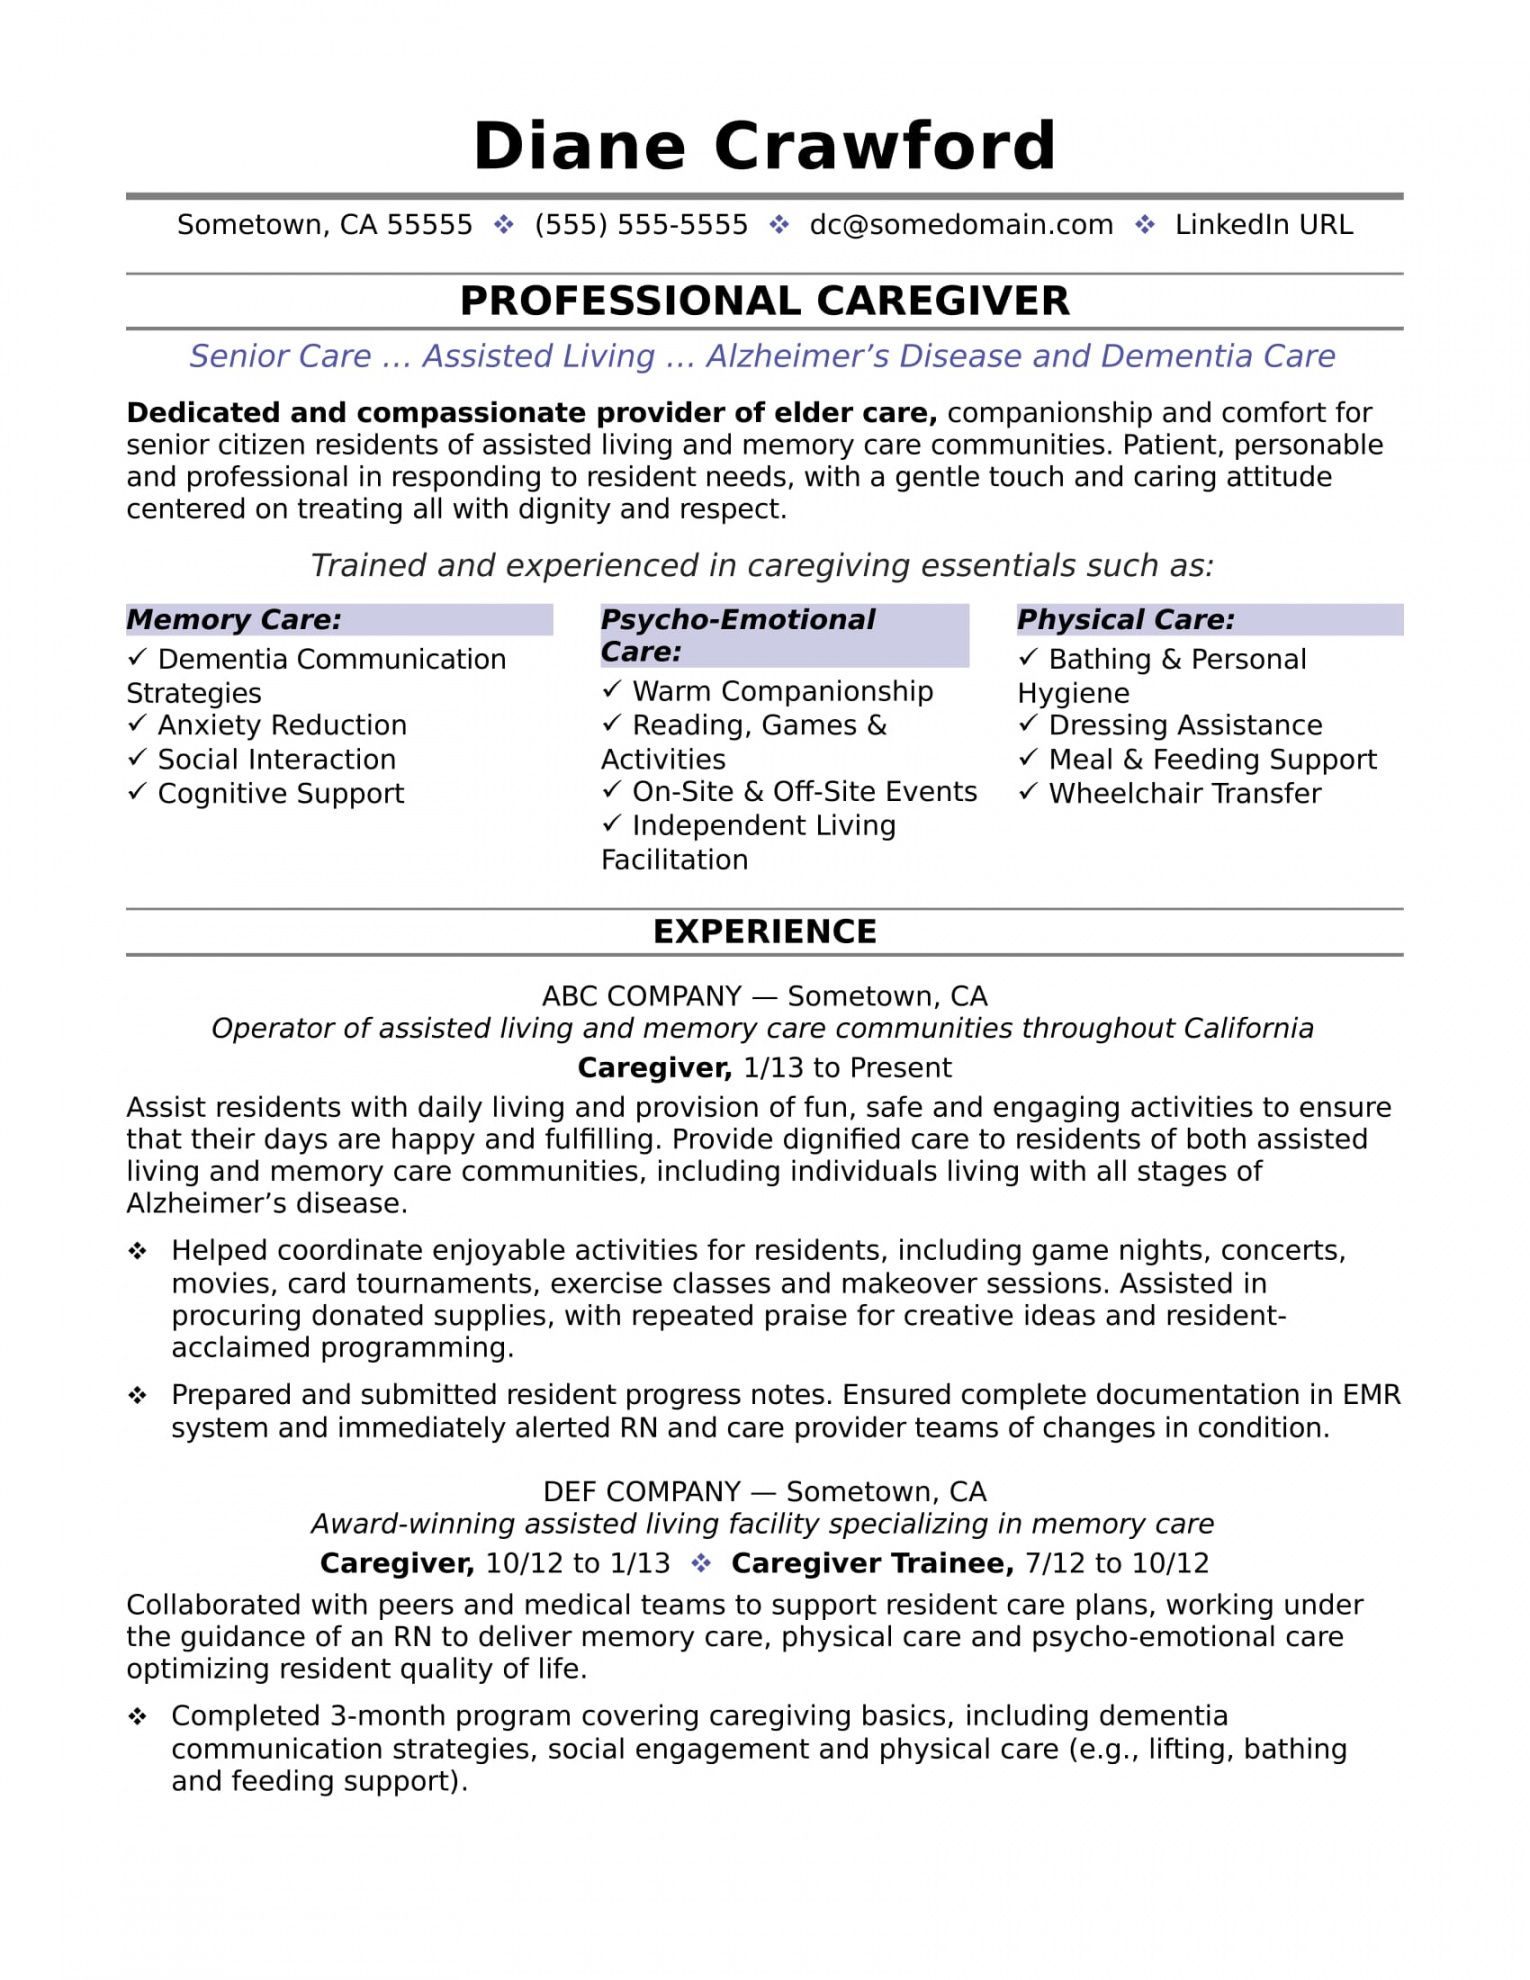 caregiver-job-description-template